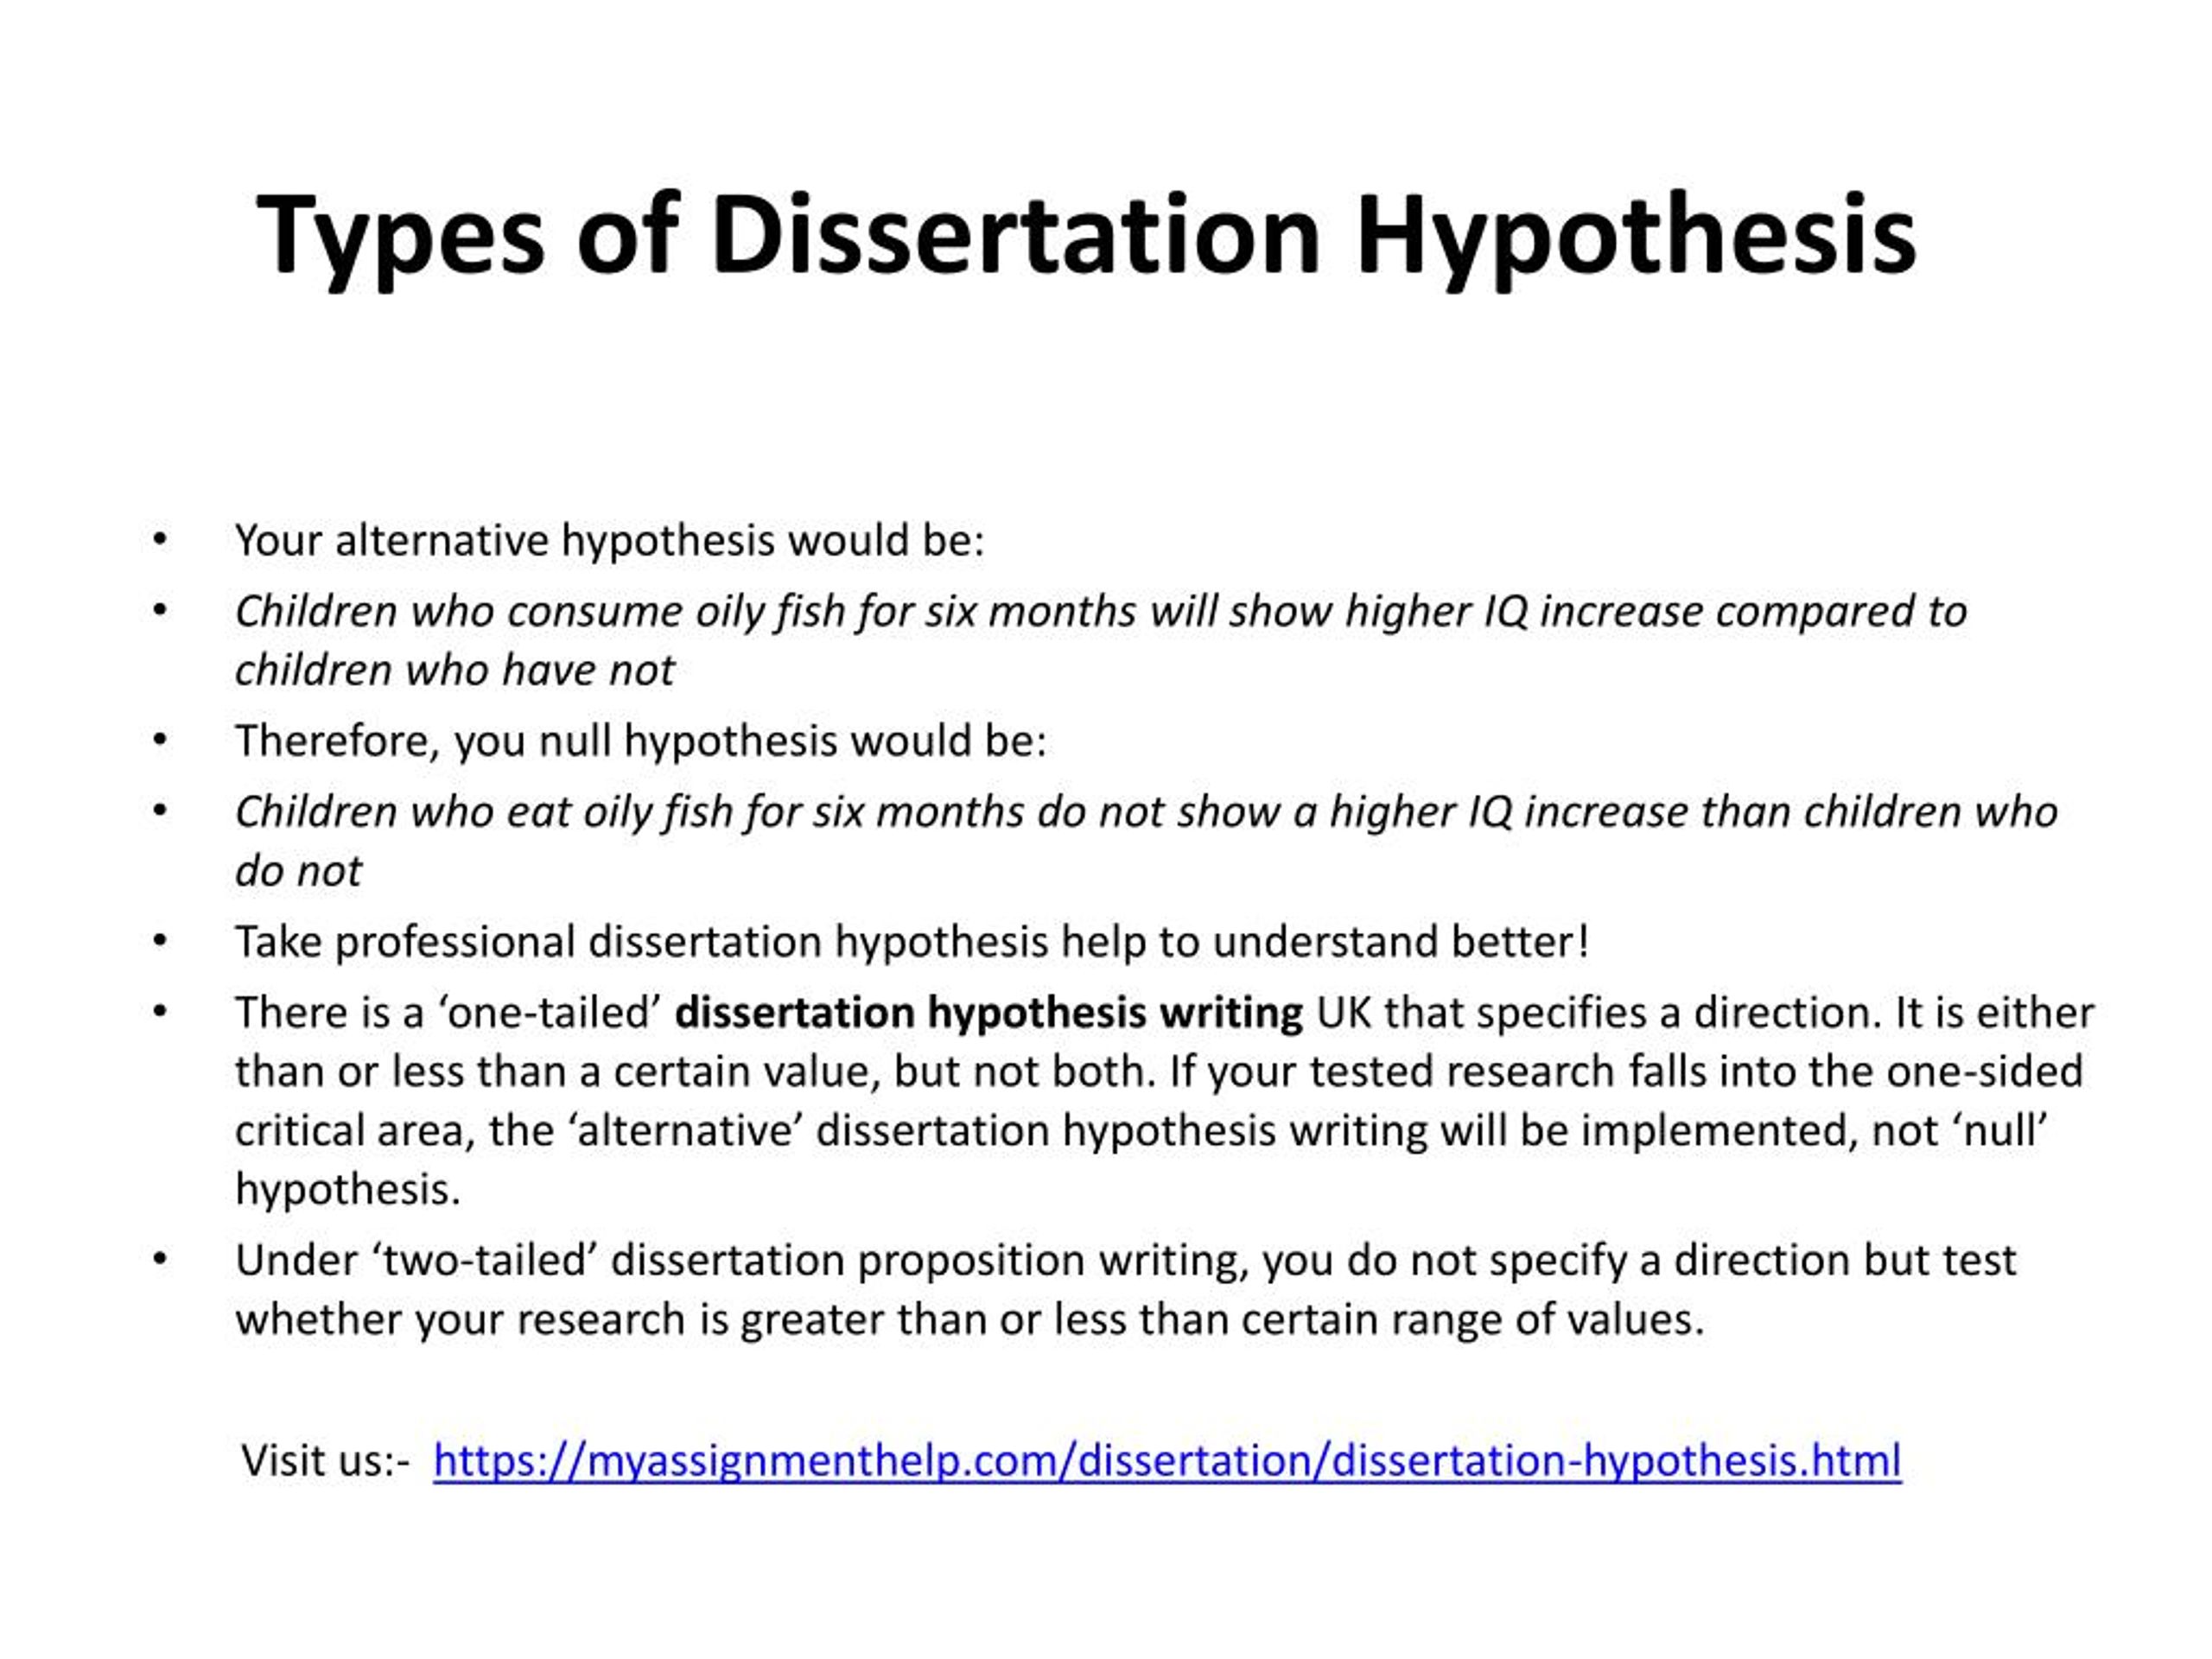 dissertation hypothesis writing